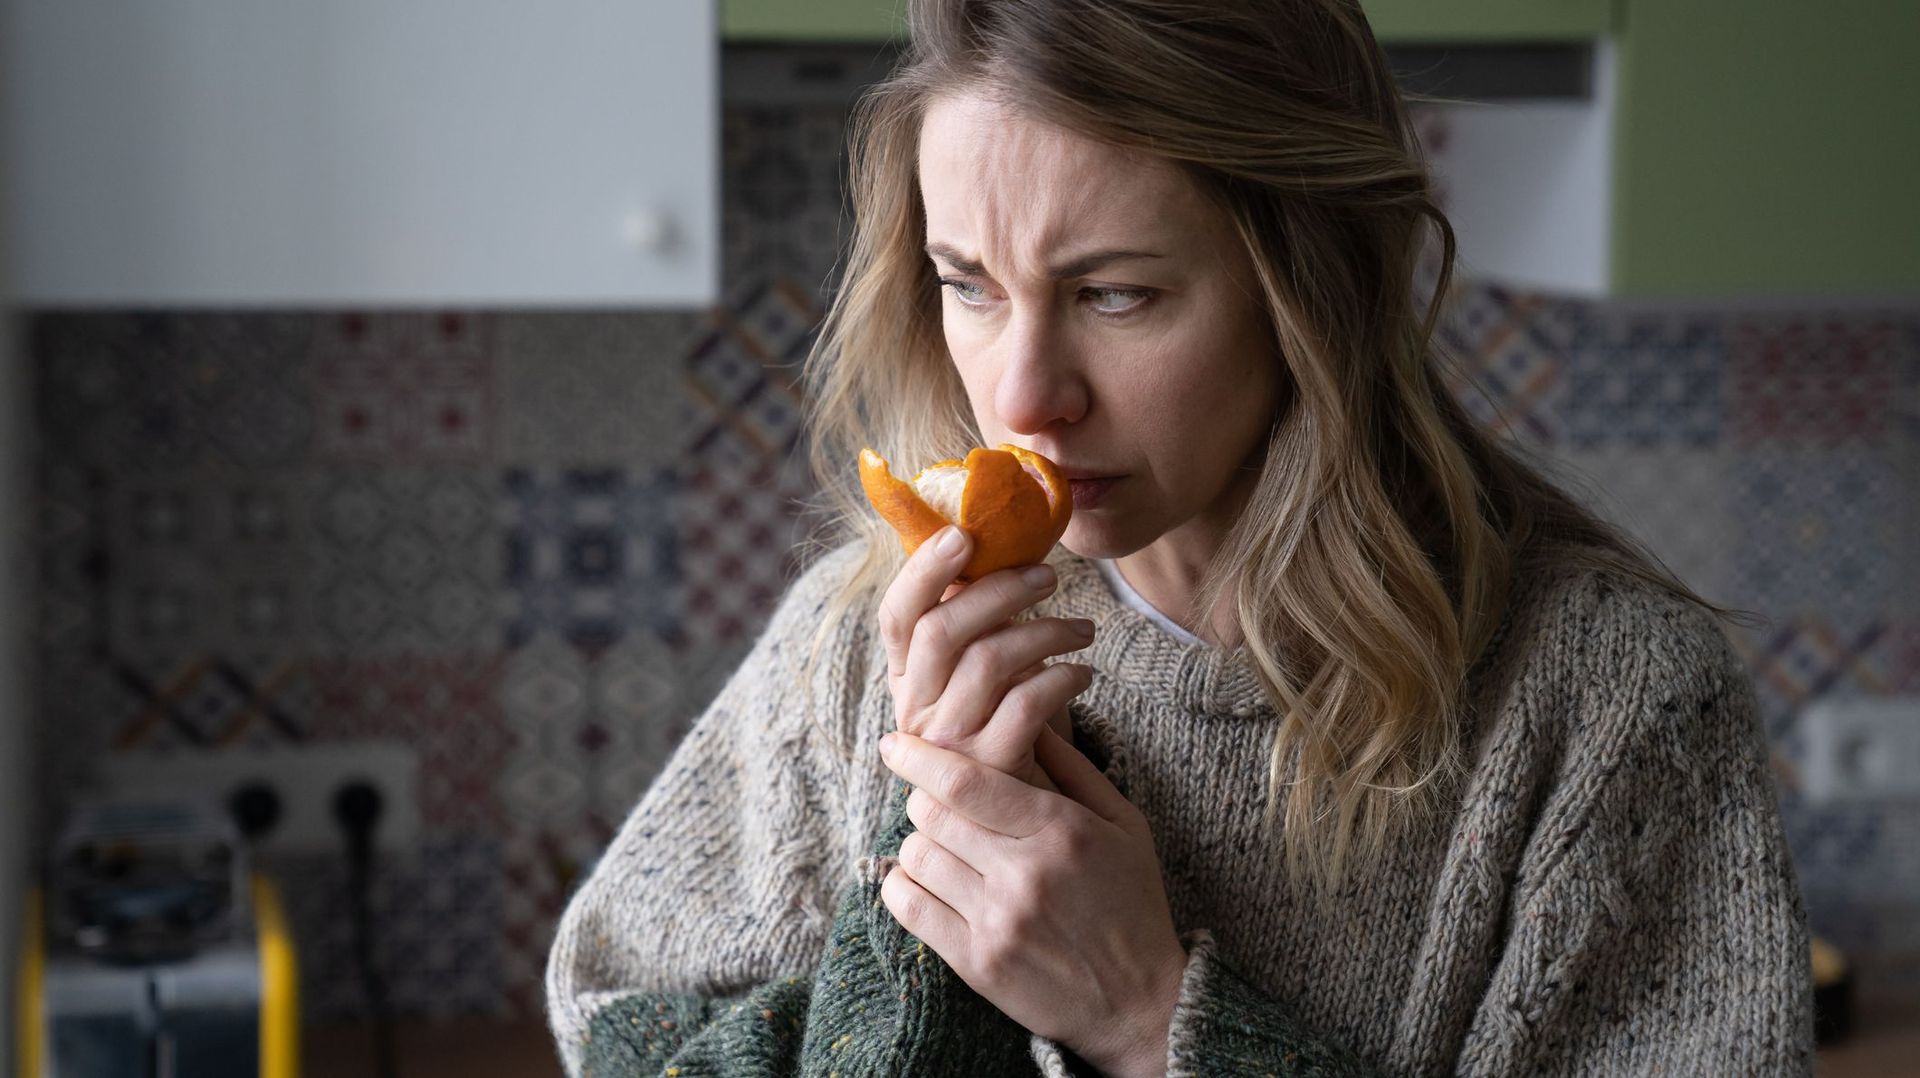 Woman Trying To Sense Smell Of Tangerine Orange, Has Symptoms Of Covid-19 Corona Virus Infection